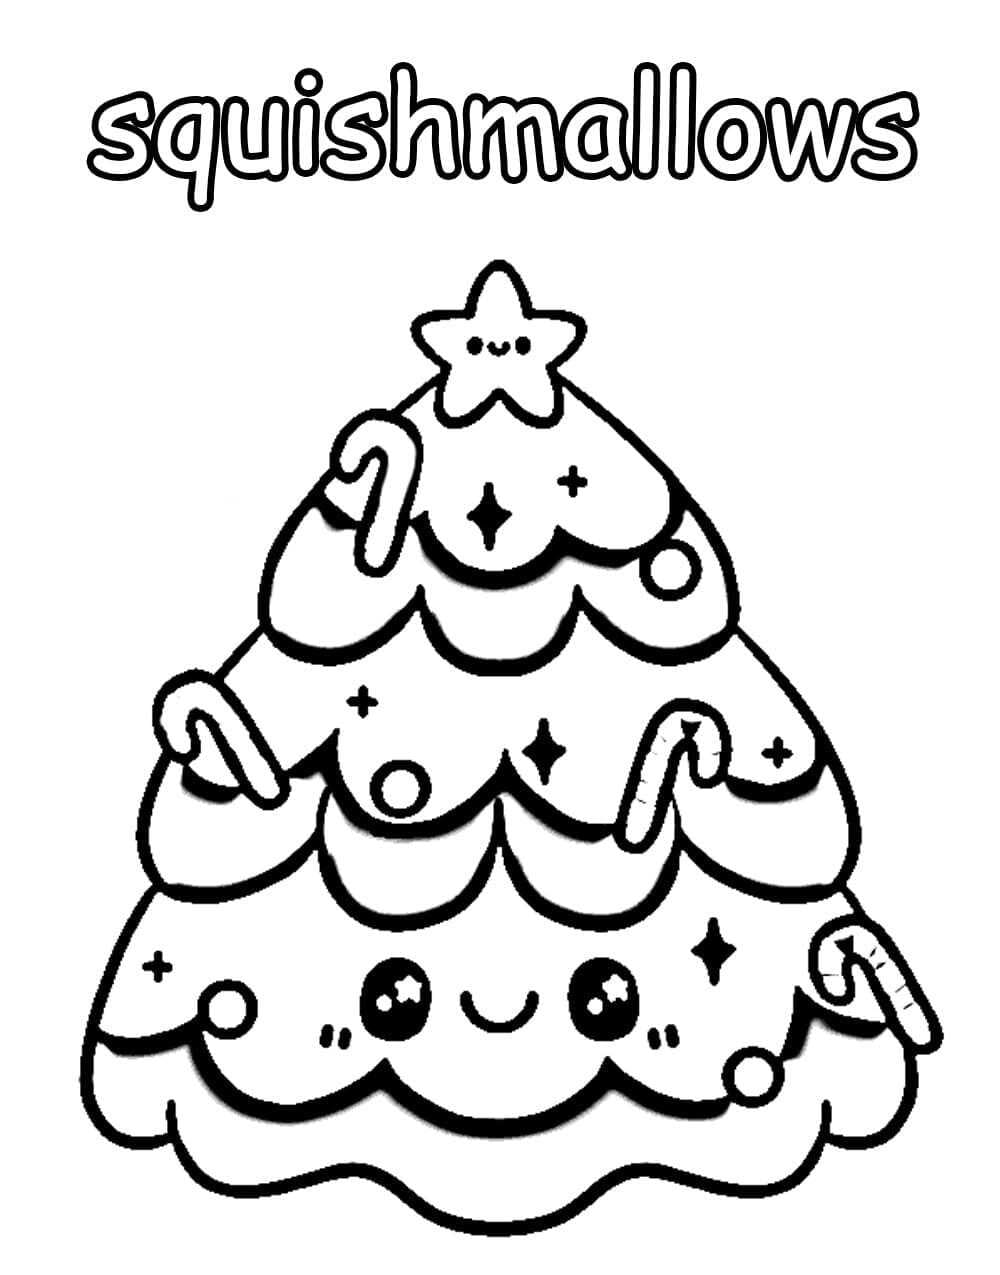 Desenhos de Squishmallows para Colorir